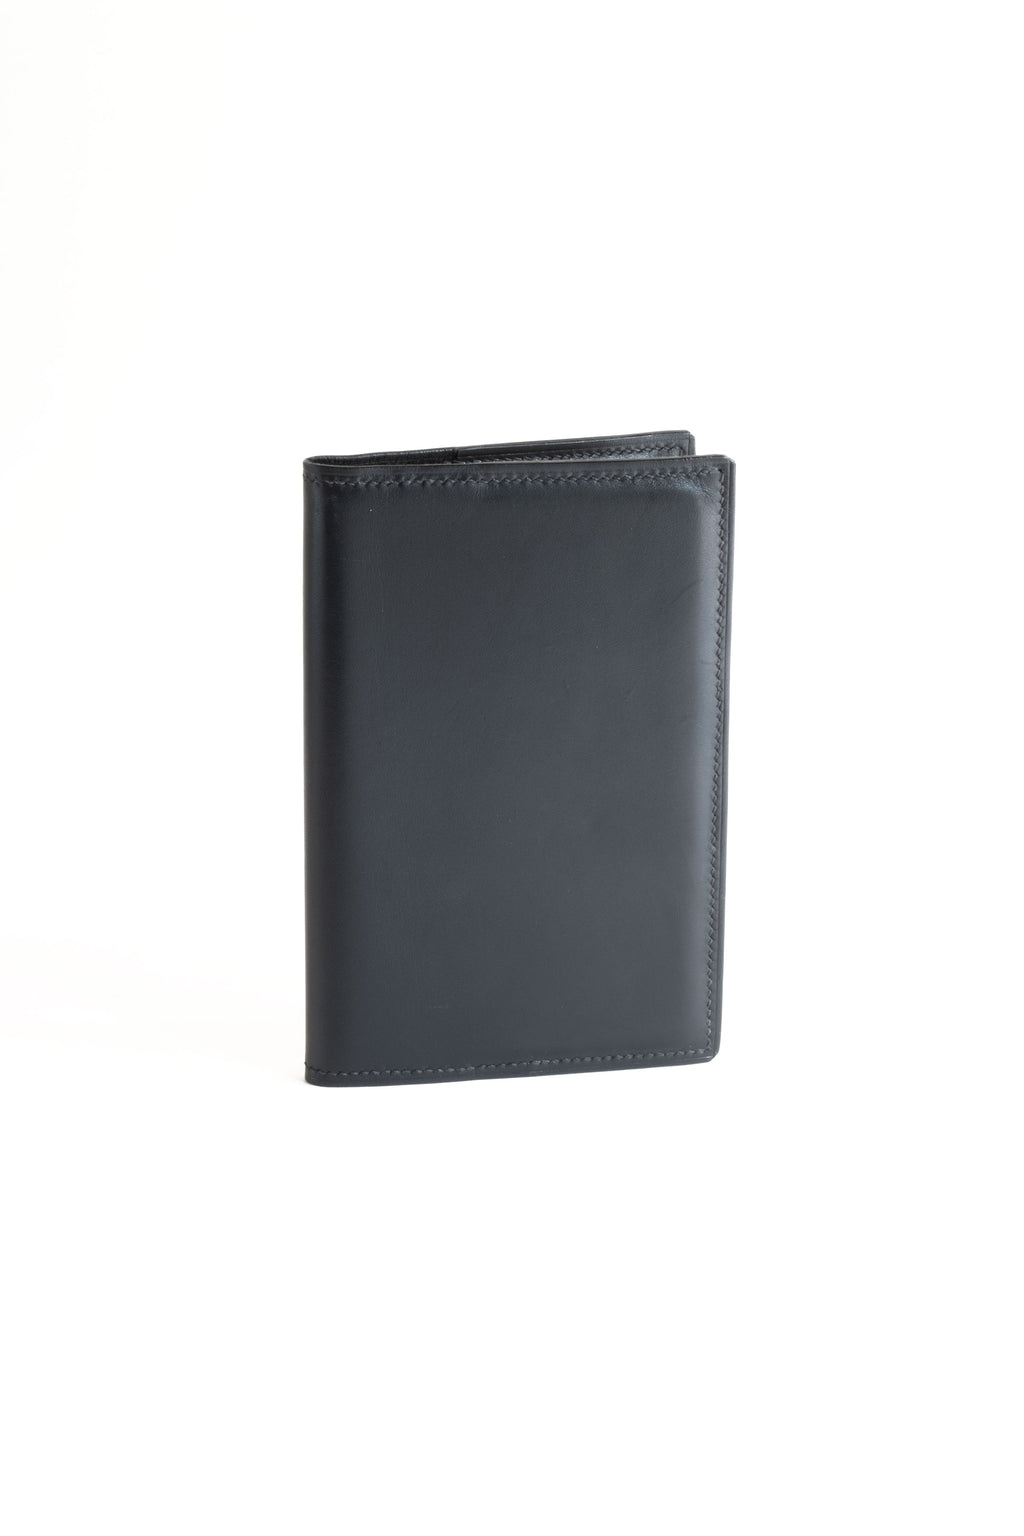 Bruna Andreoni Notebook Sleeve Black Smooth